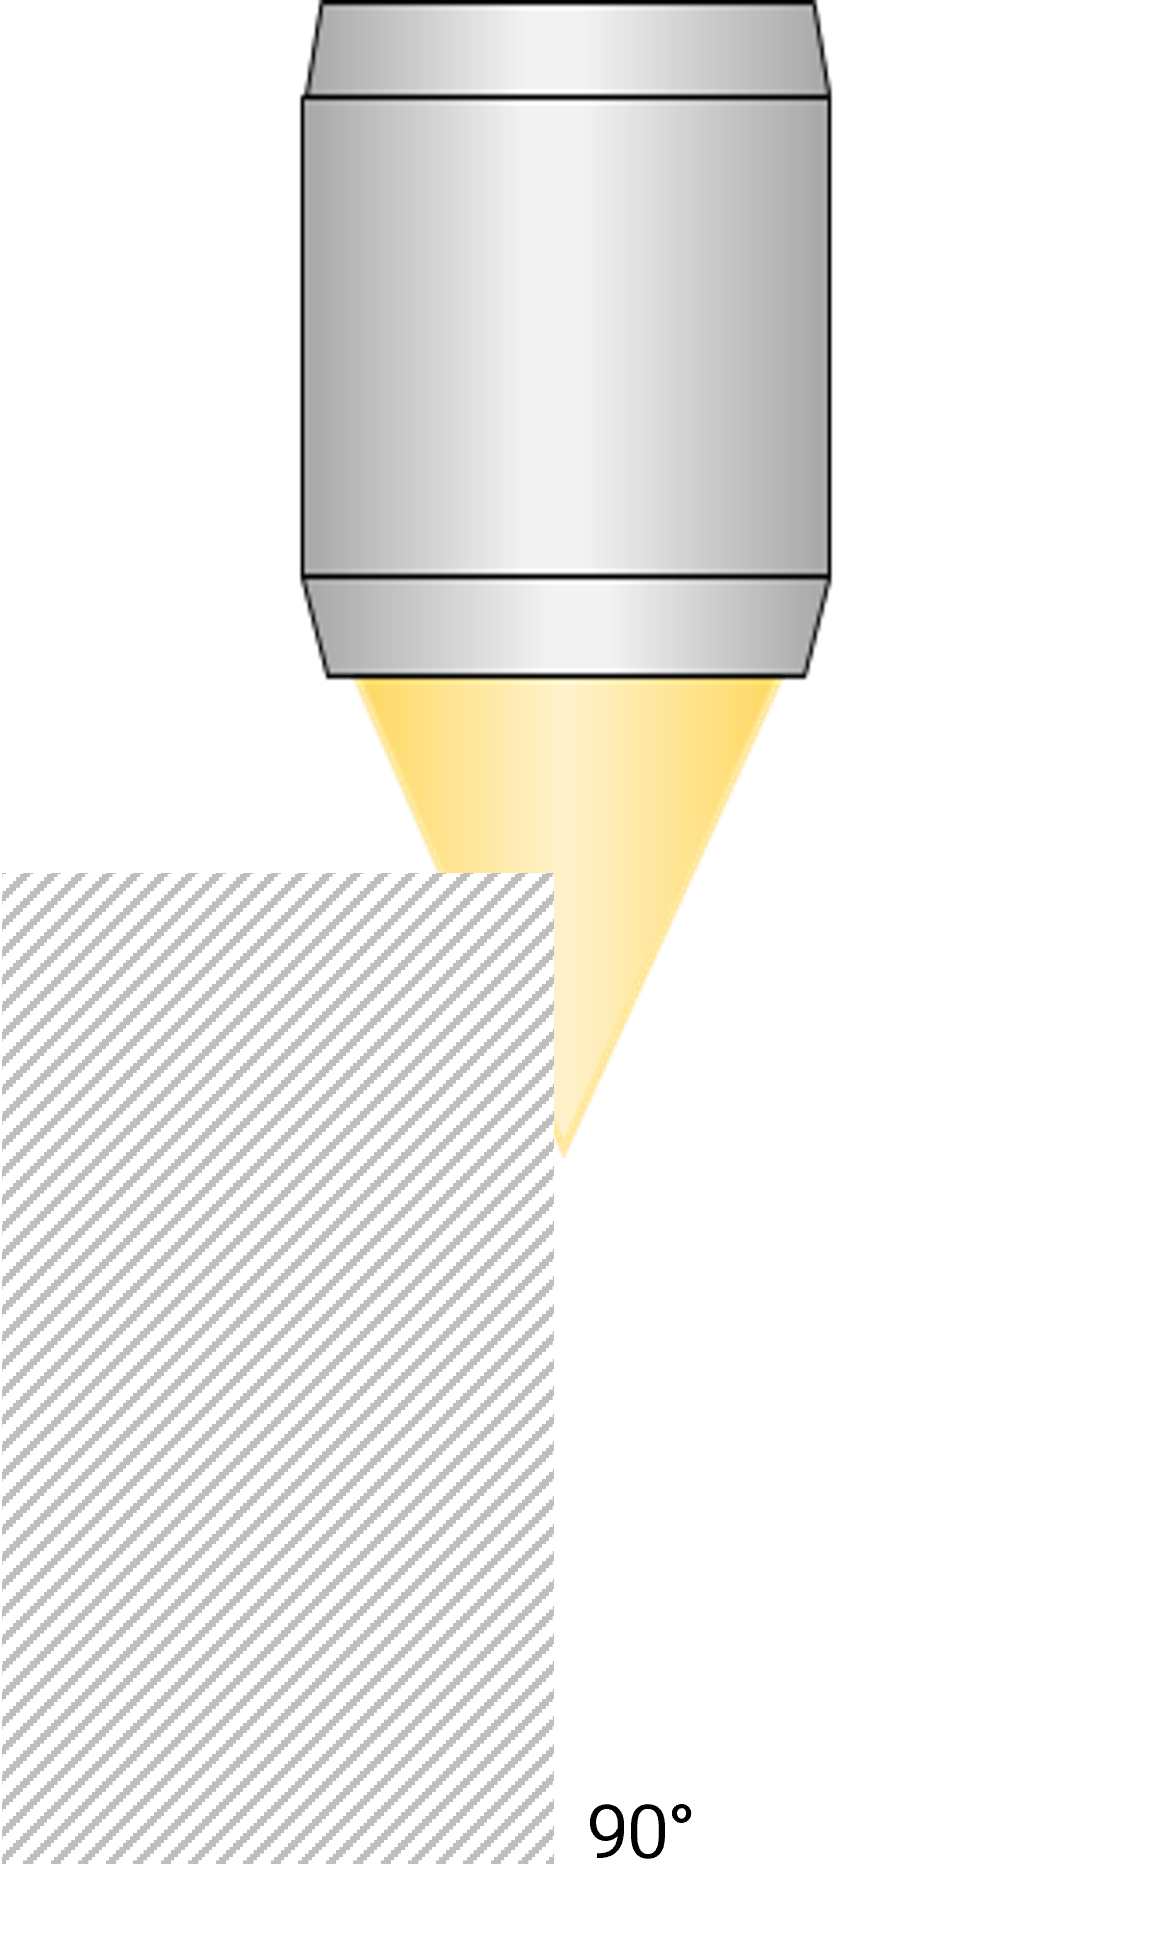 optical vertical focus probing